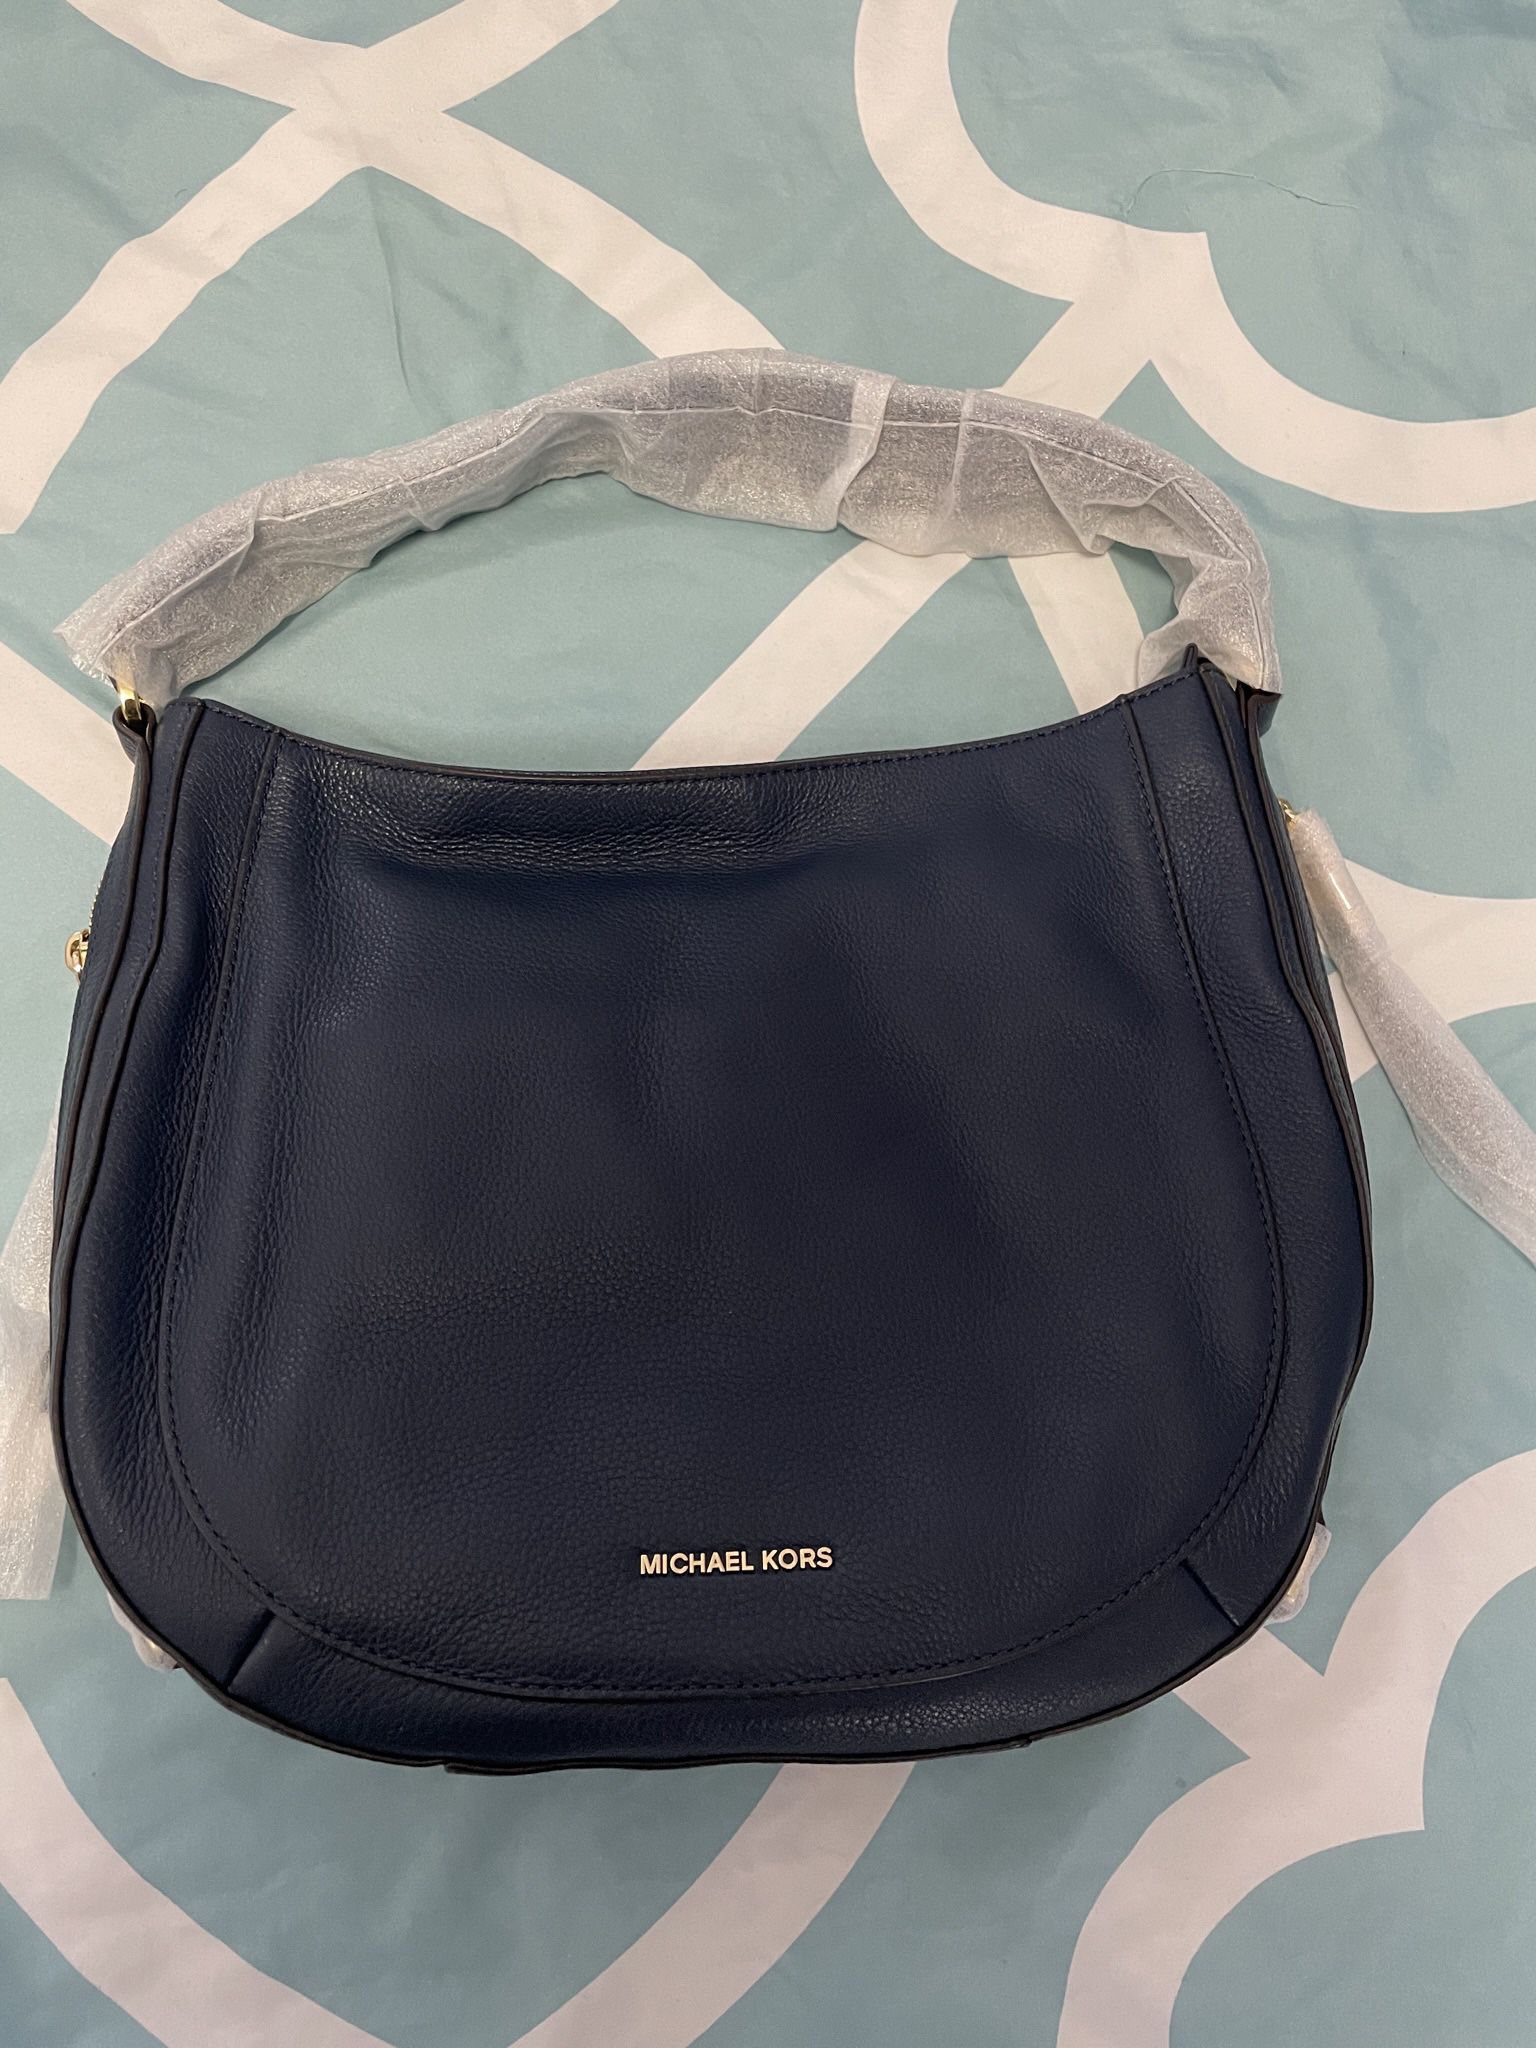 NWT AUTHENTIC Michael Kors Julia Handbag - Navy Blue Valued $368